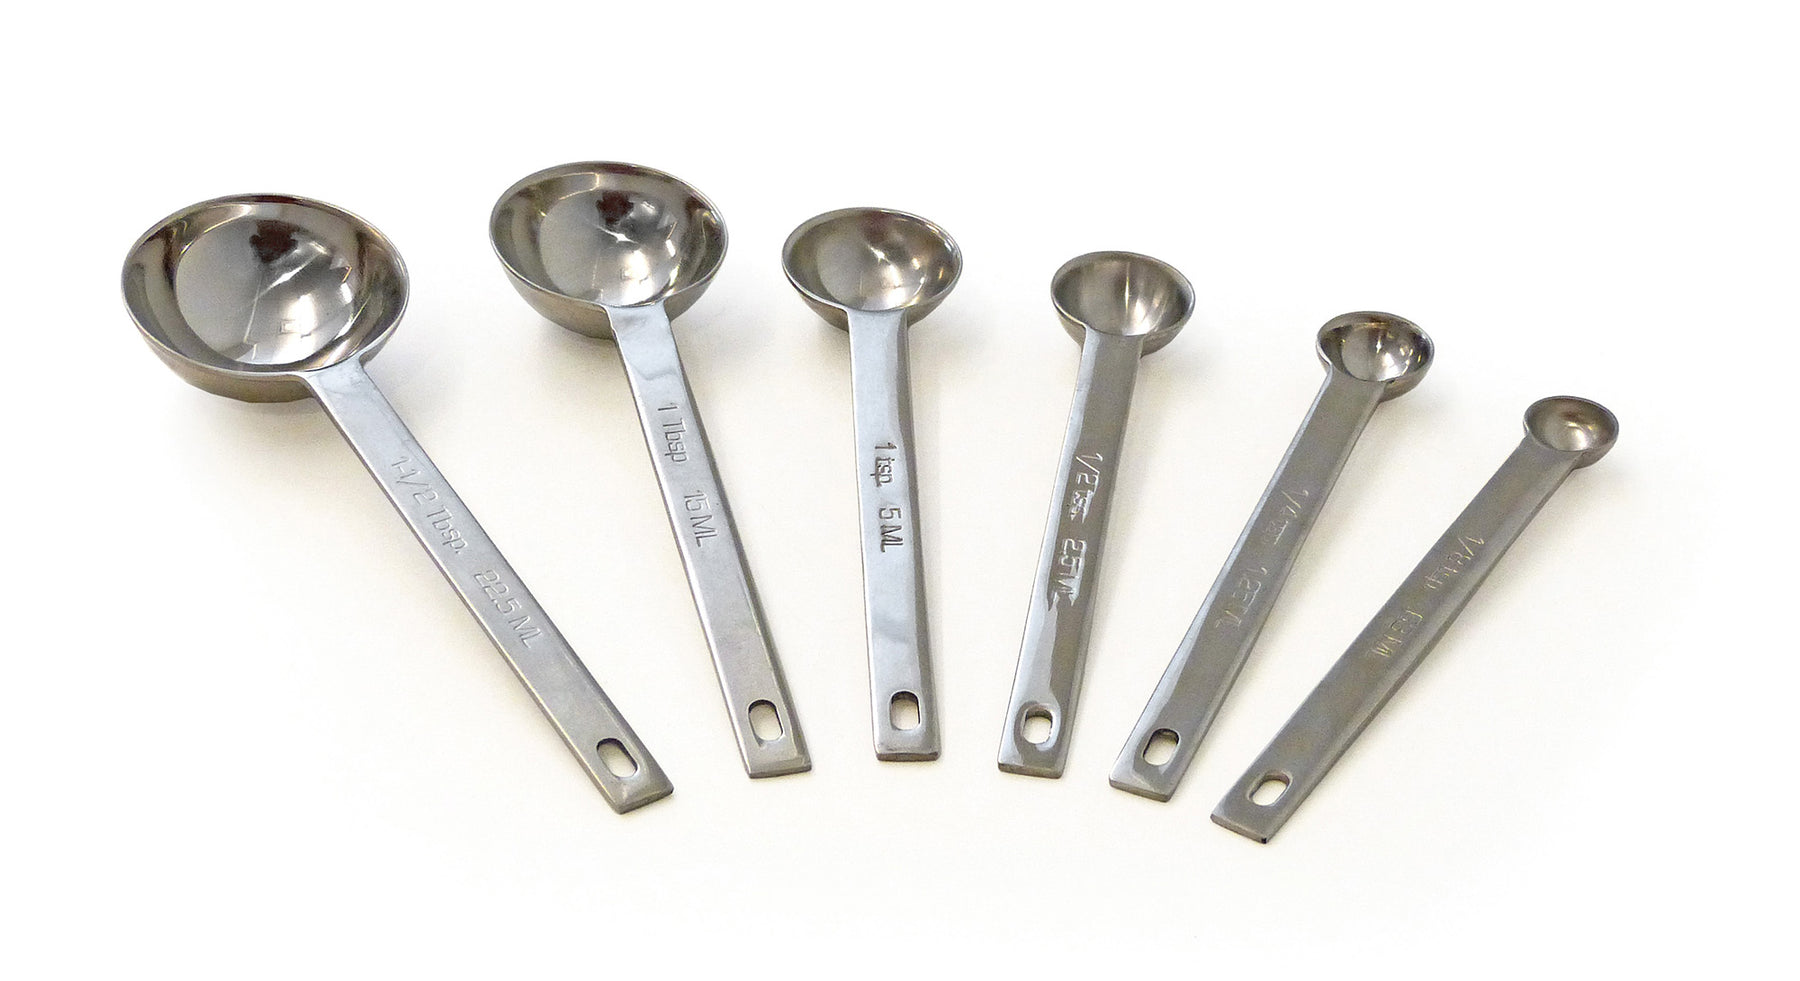 Rsvp Endurance Stainless Steel 1/4 Teaspoon Measuring Spoon